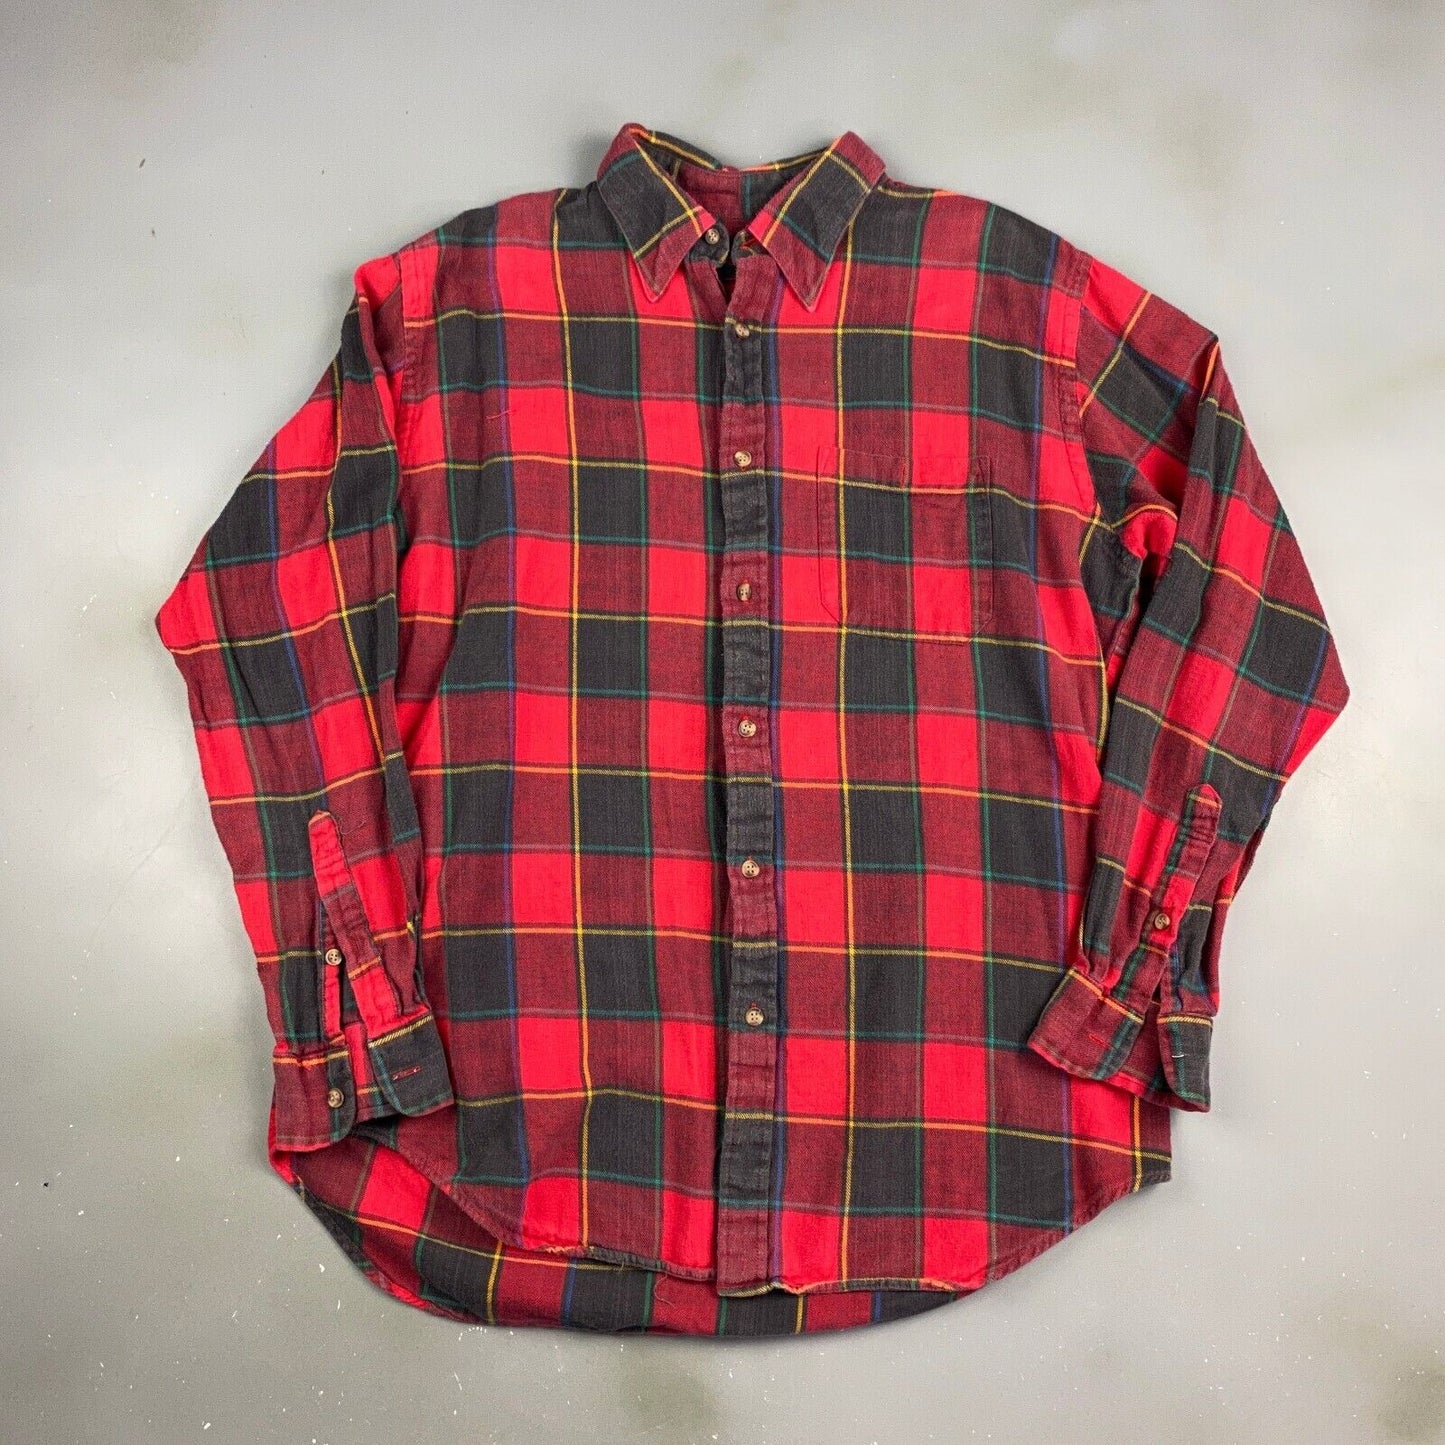 VINTAGE 90s Oshman's Red Plaid Flannel Button Up Shirt sz Large Adult